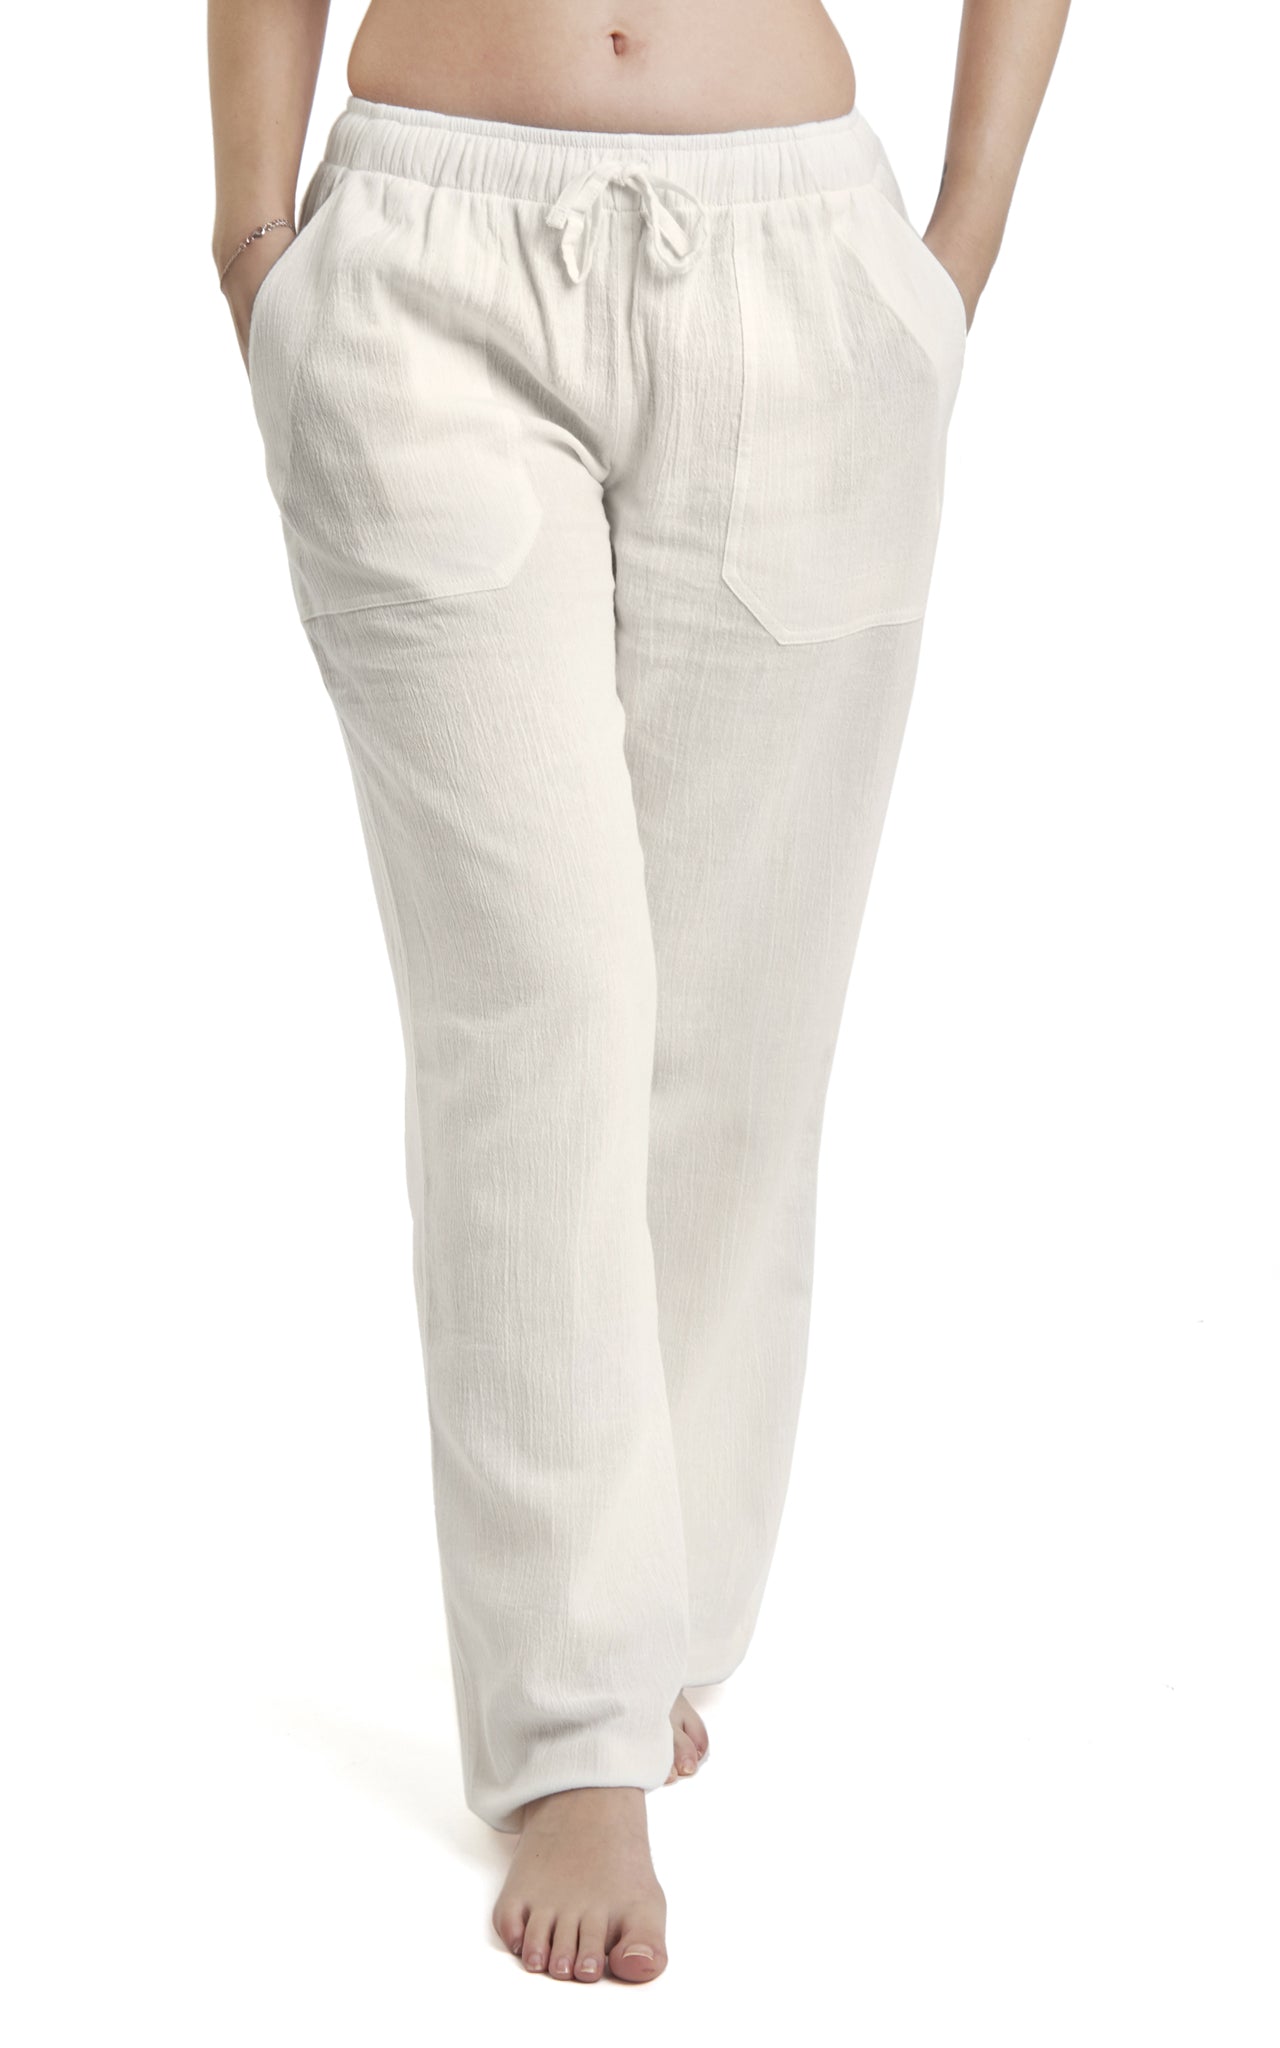 Women's Gauze Cotton PJ & Beach Pants with Pockets (Cream)